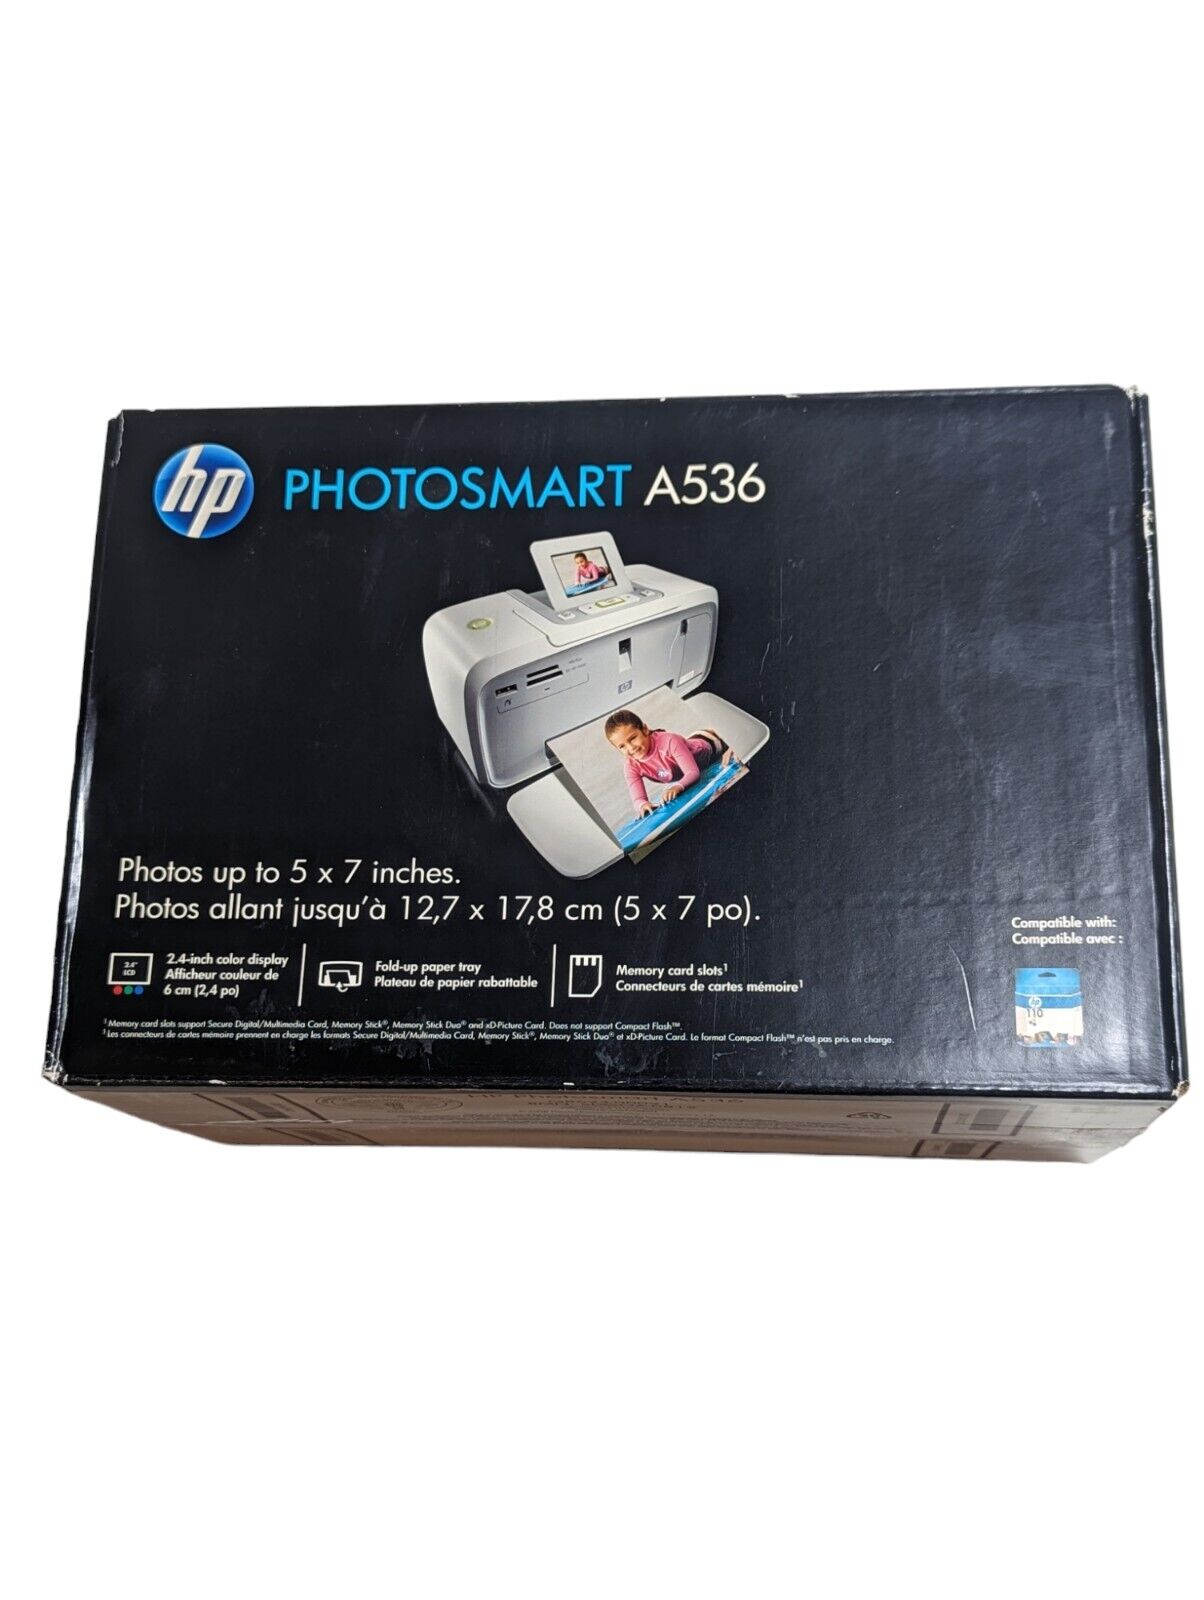 New/Sealed HP Photosmart A536 Digital Photo Inkjet Color Printer w/ 2.4